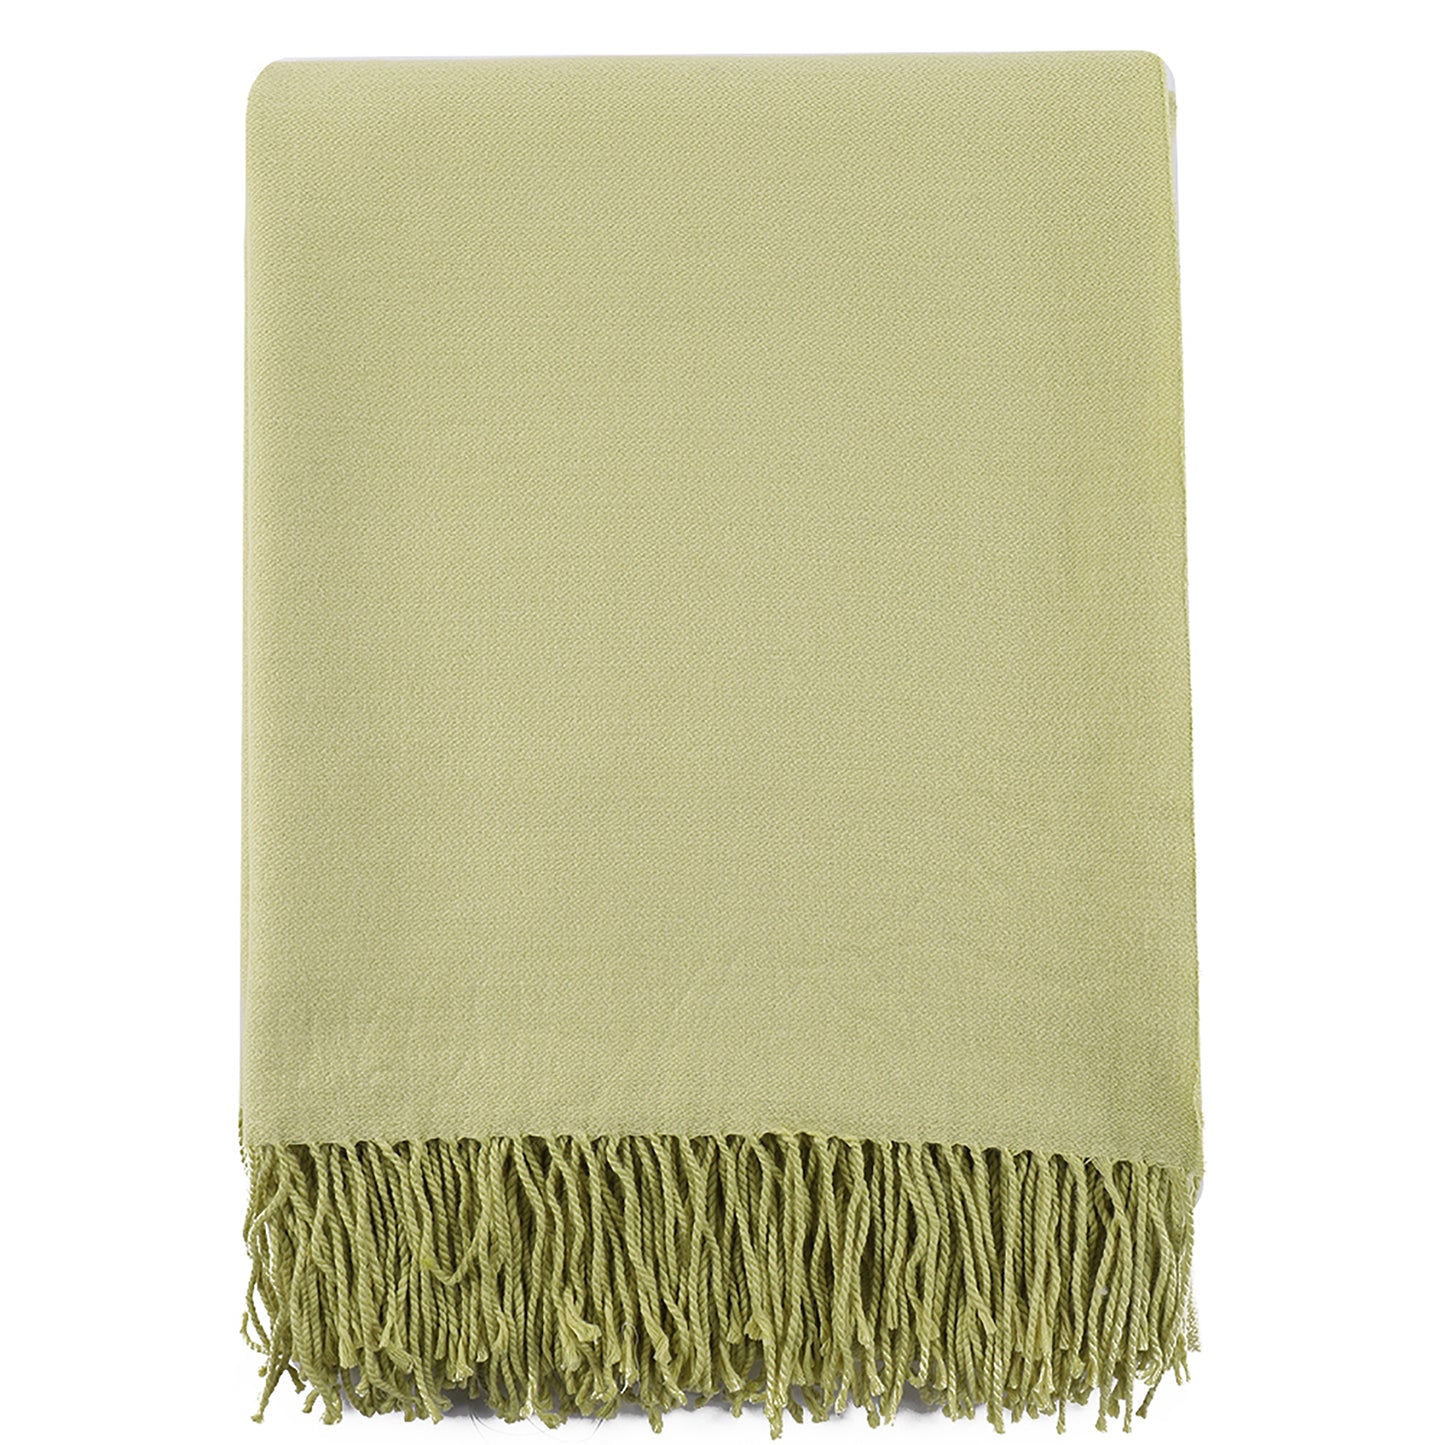 Knitted Throw Blanket Fringe Dusty Slate Grass Green Tassel Boho Decor Outdoor Woven Textured Soft Lightweight